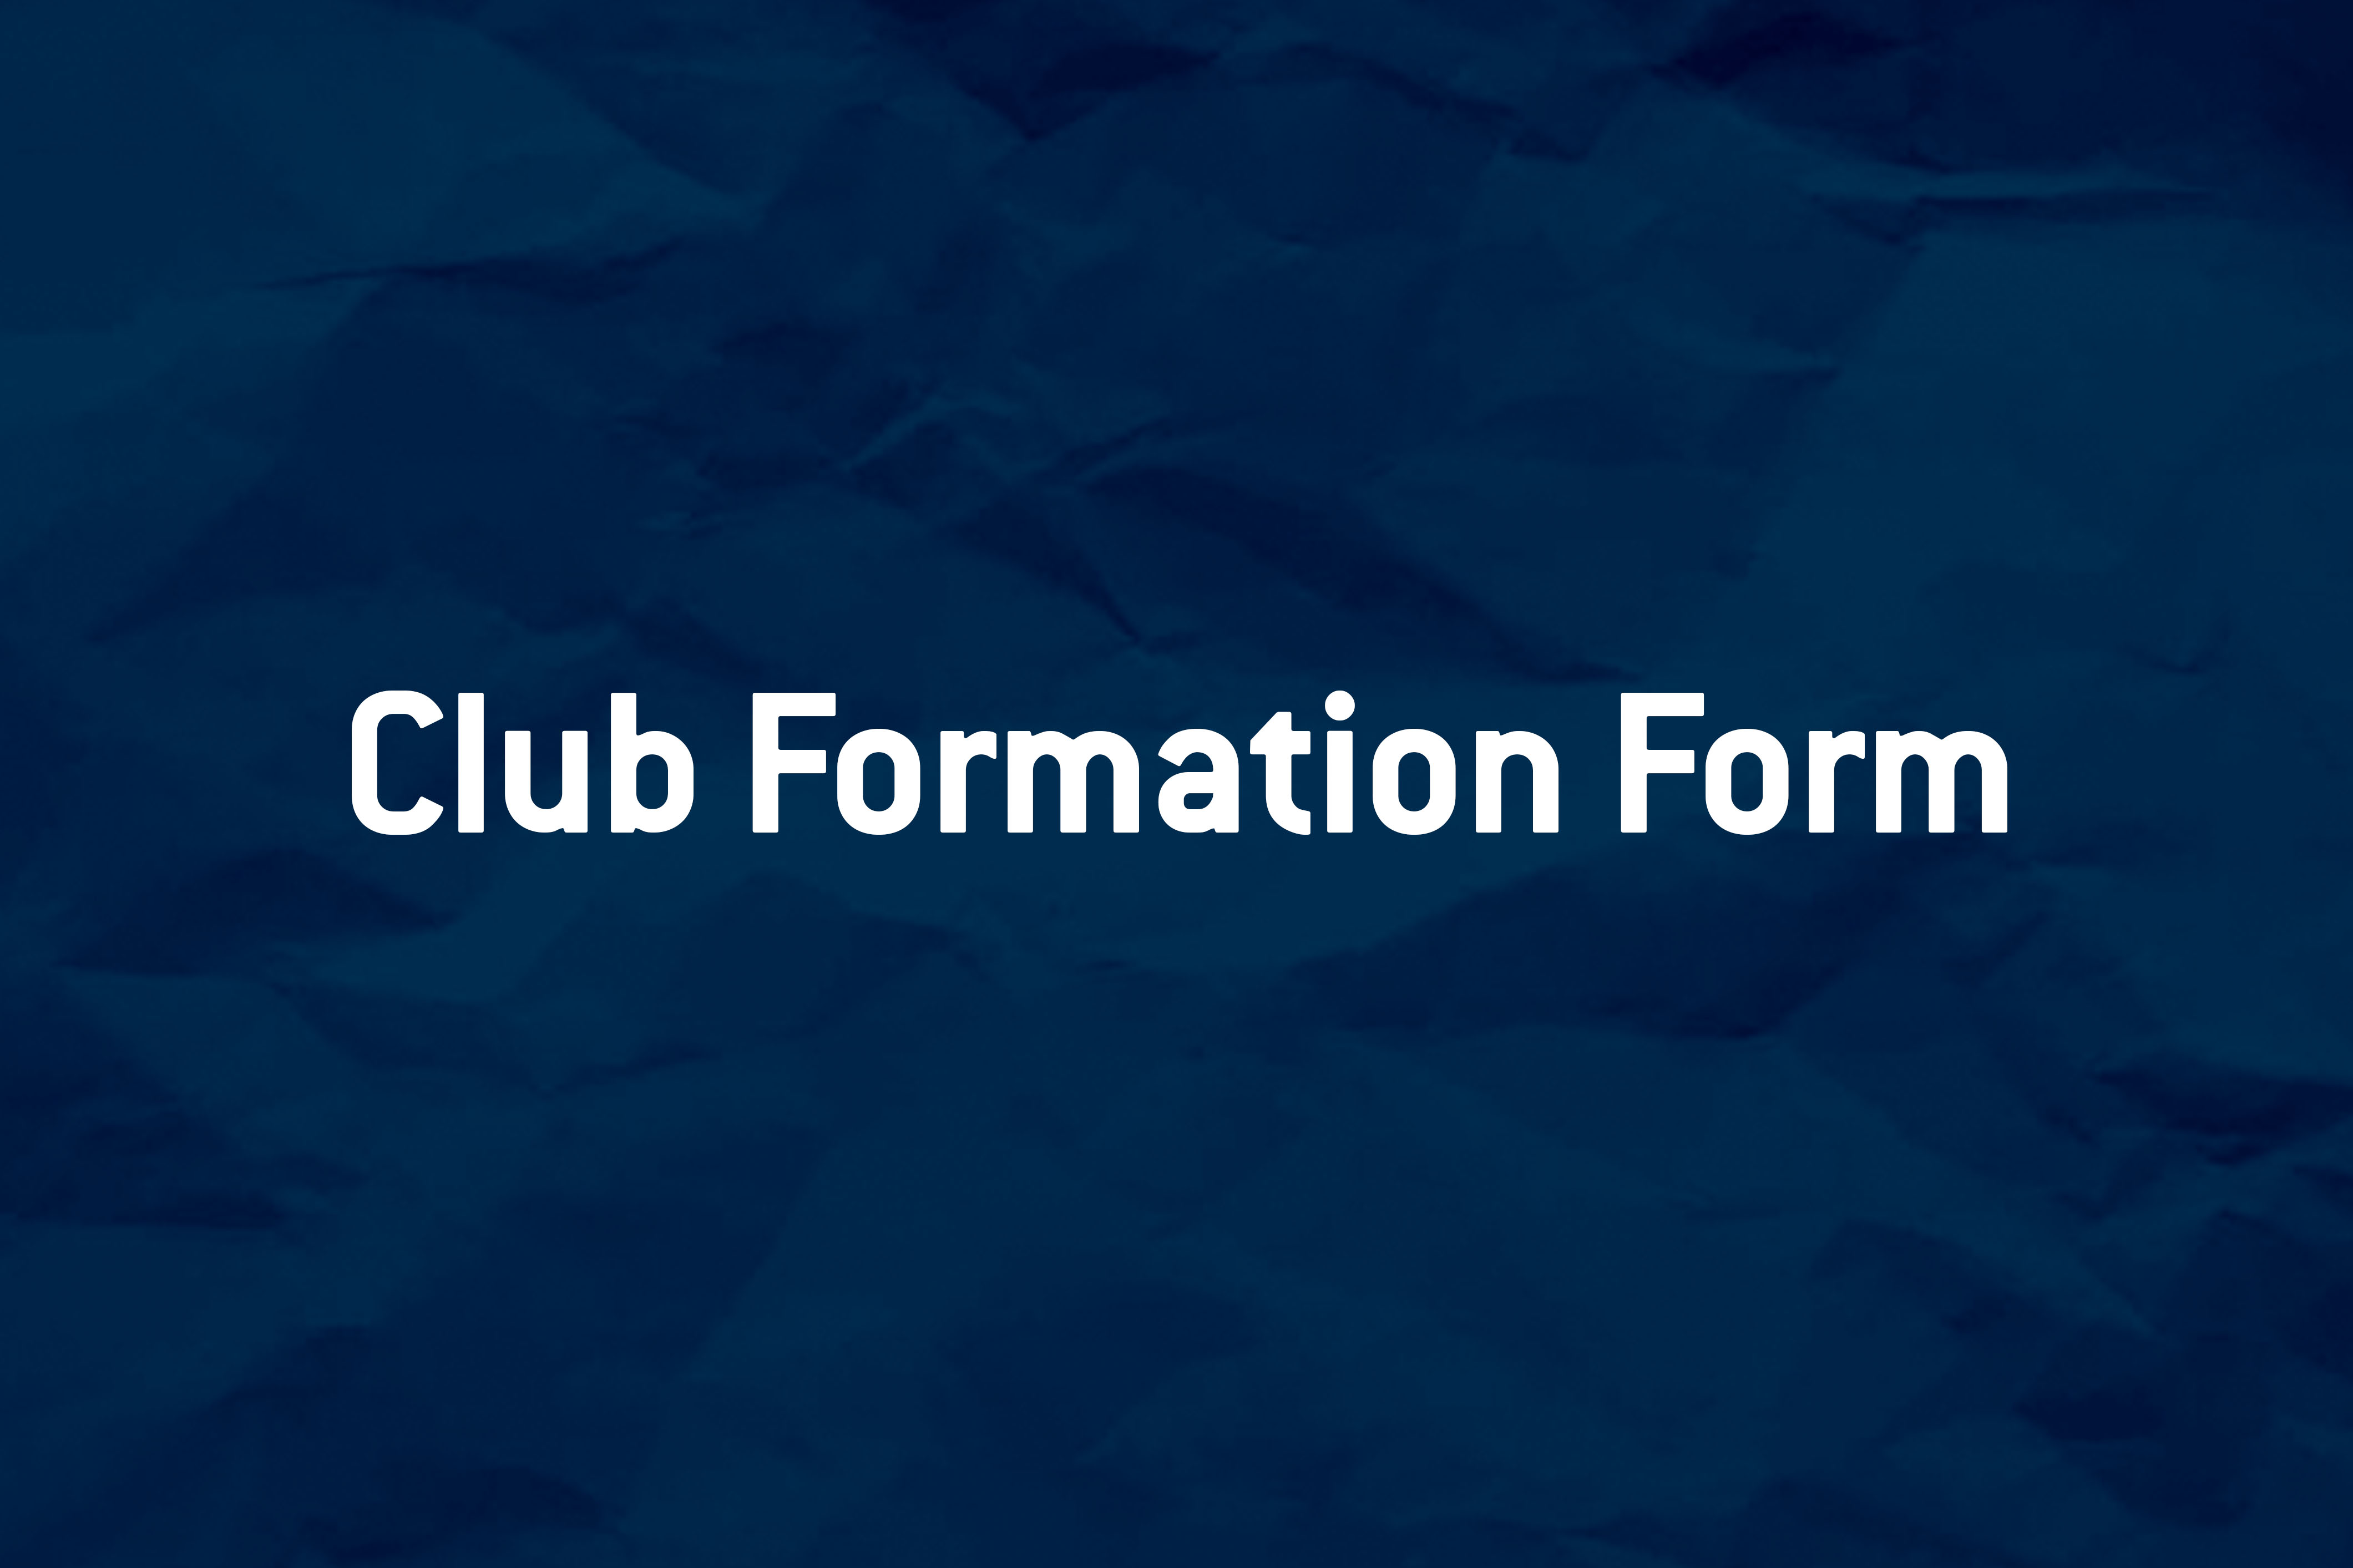 Club Formation Form image